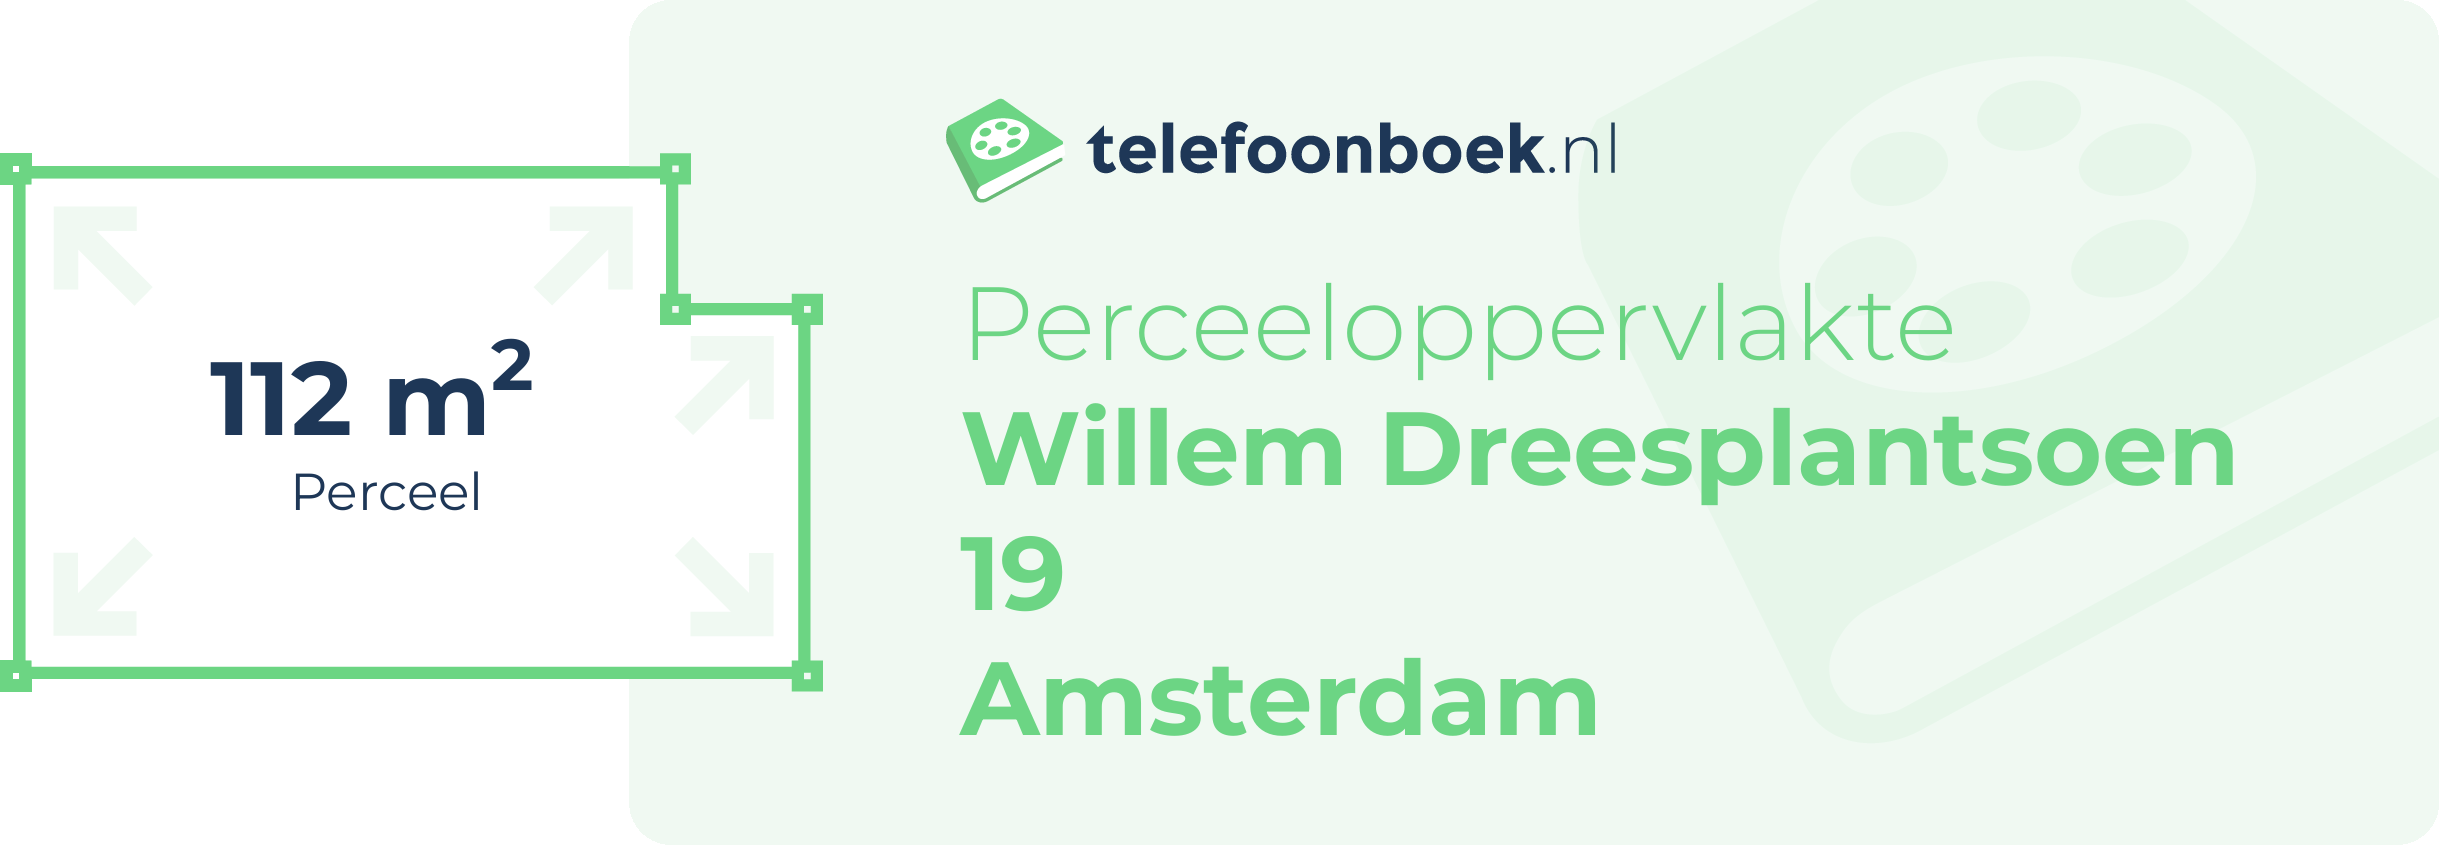 Perceeloppervlakte Willem Dreesplantsoen 19 Amsterdam